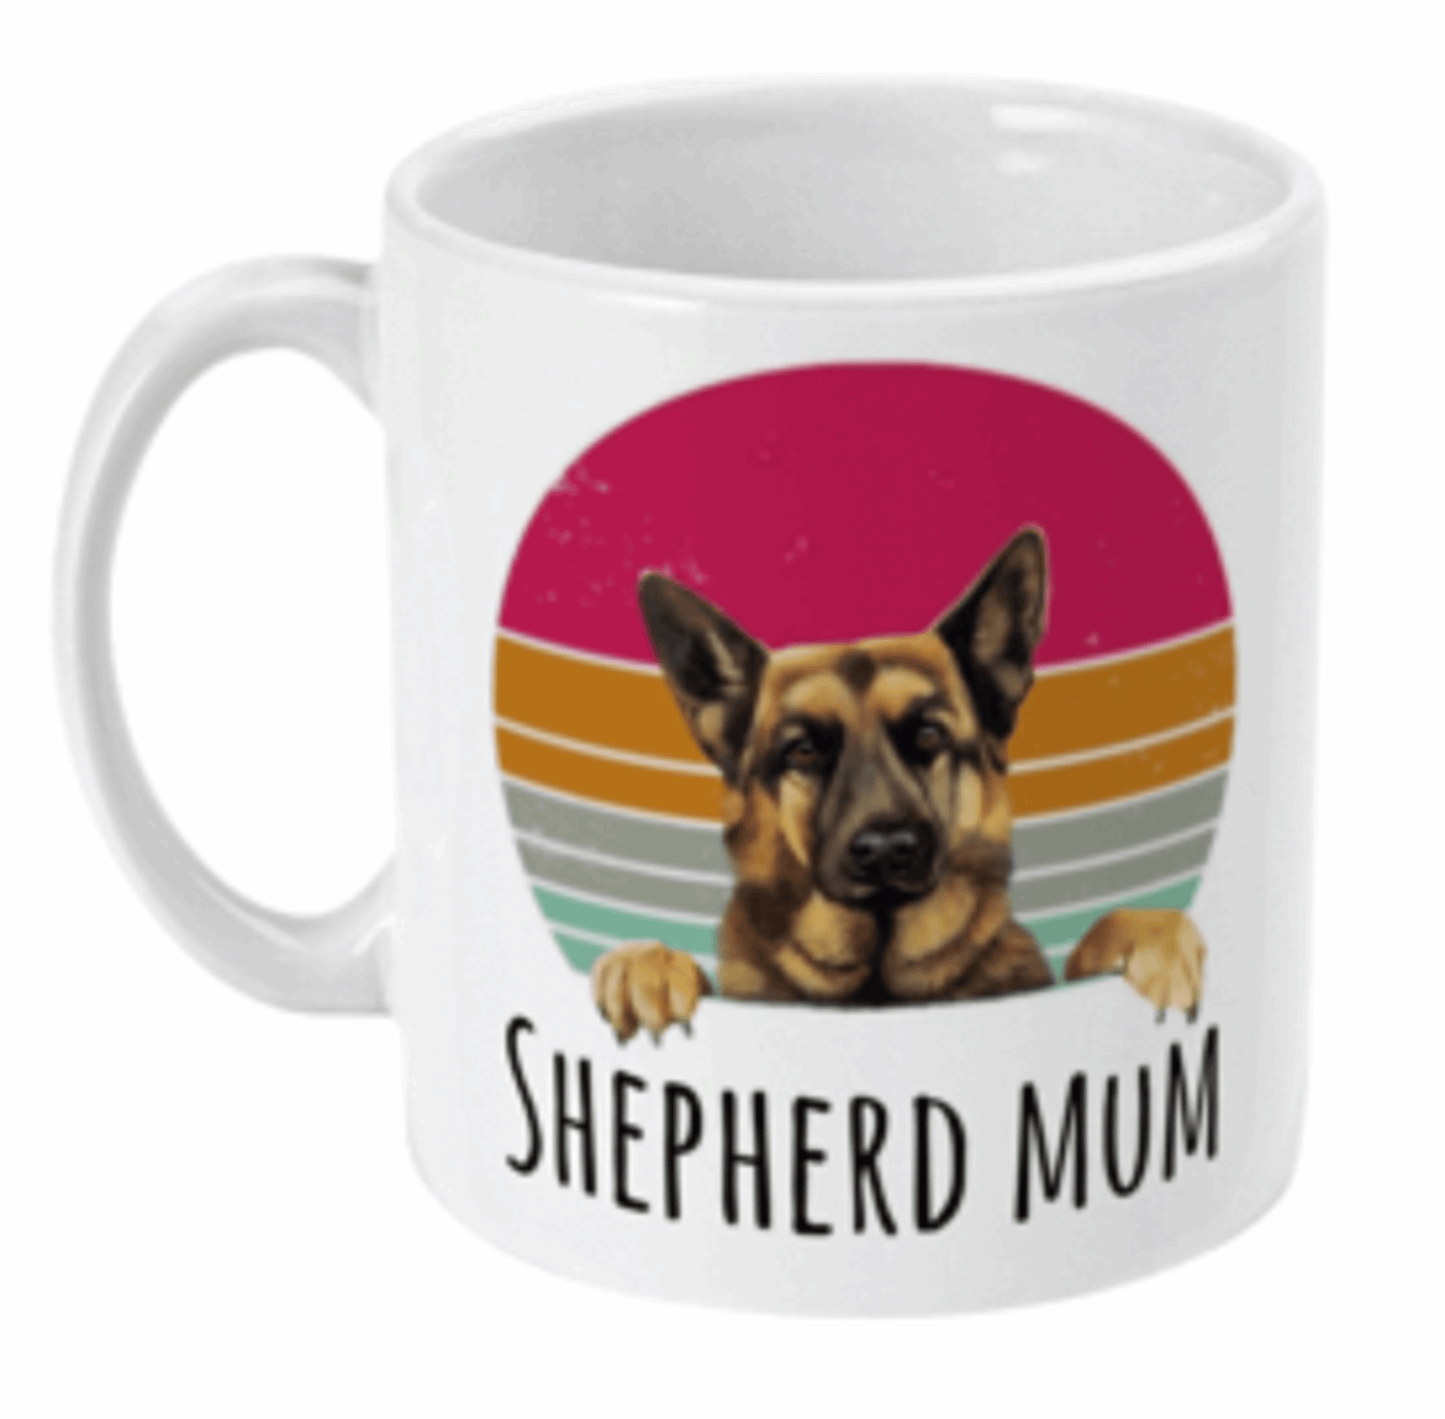  German Shepherd Mum Coffee Mug by Free Spirit Accessories sold by Free Spirit Accessories